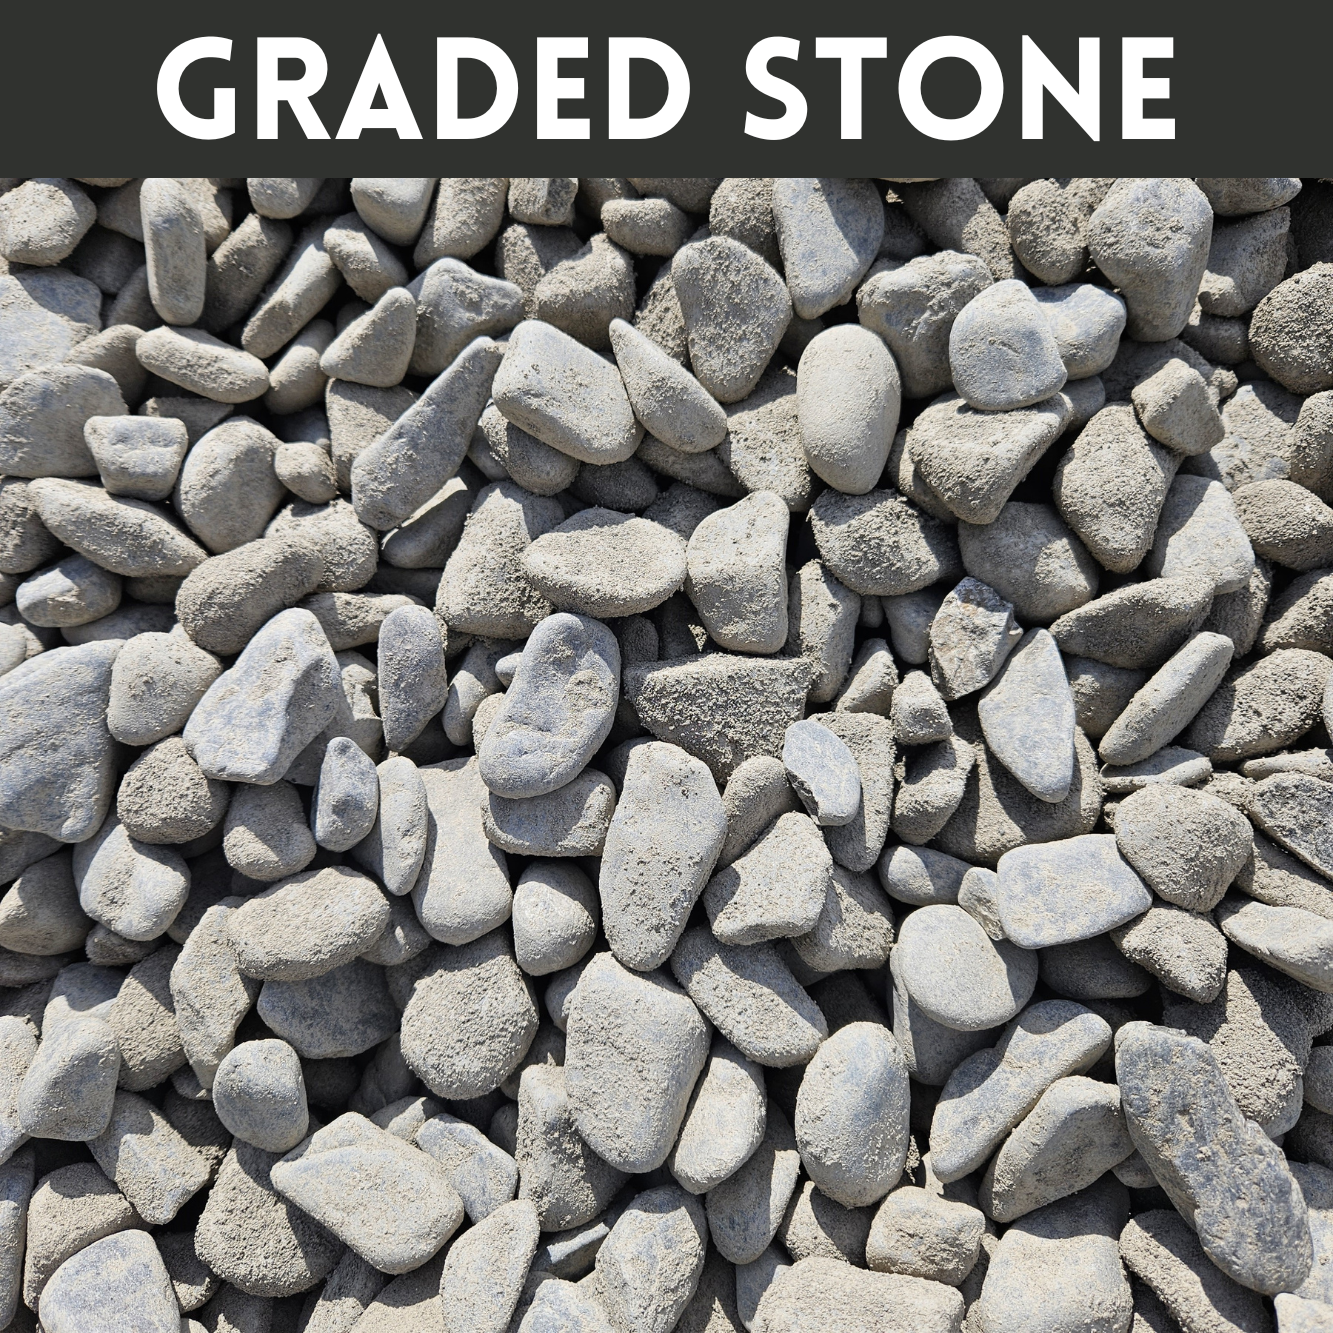 Graded Stone